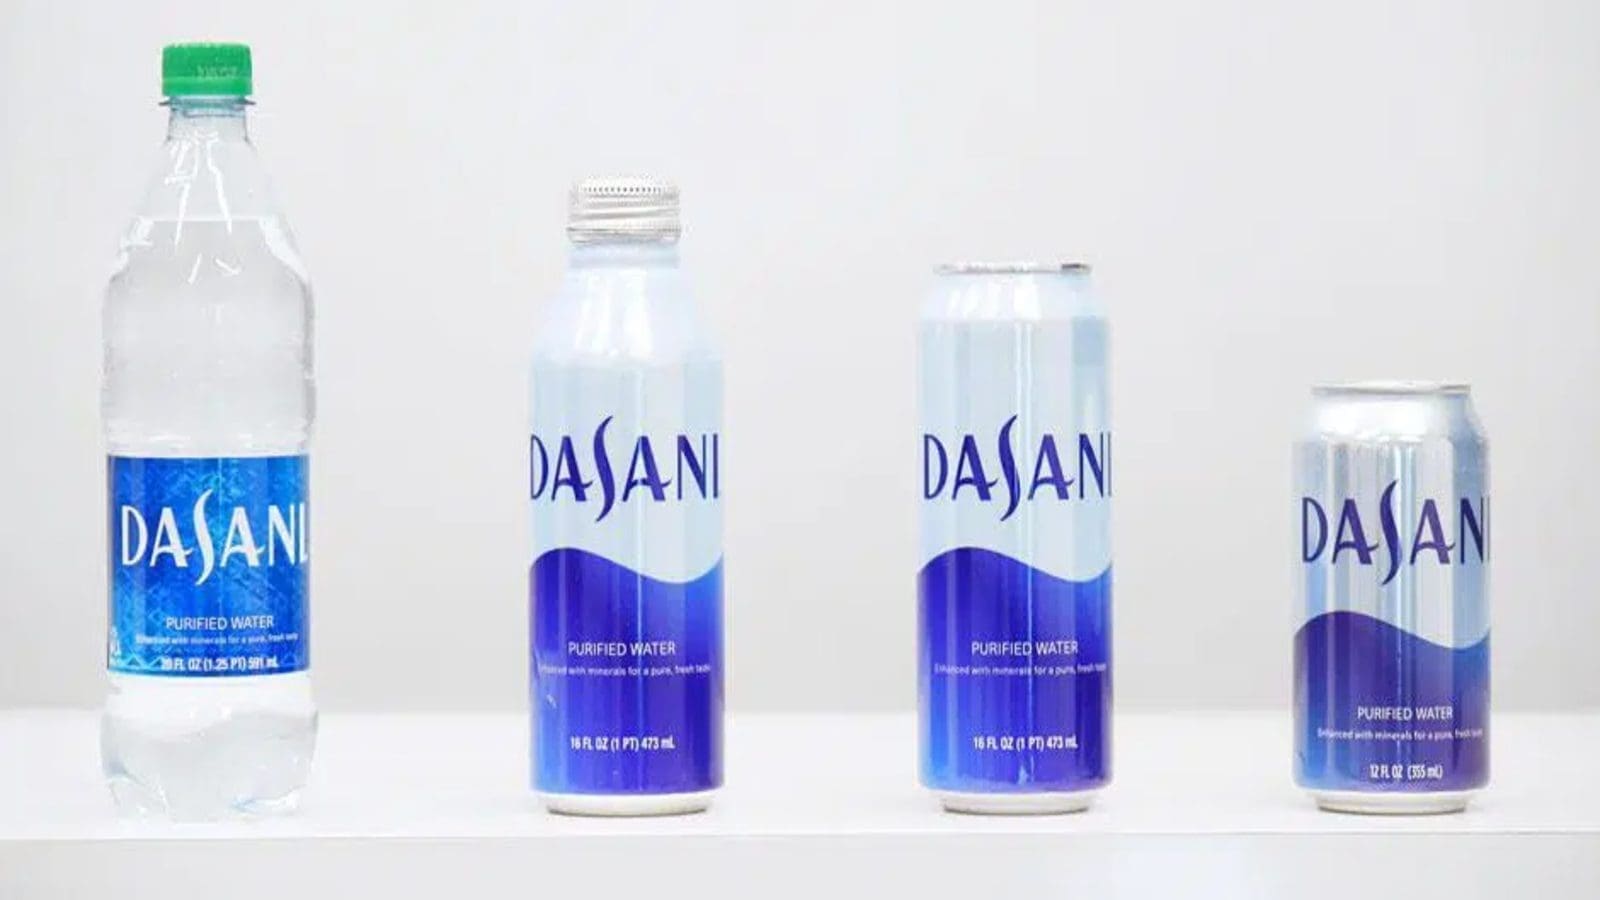 Coca-Cola’s Dasani brand adopts 100% rPET bottles in North America